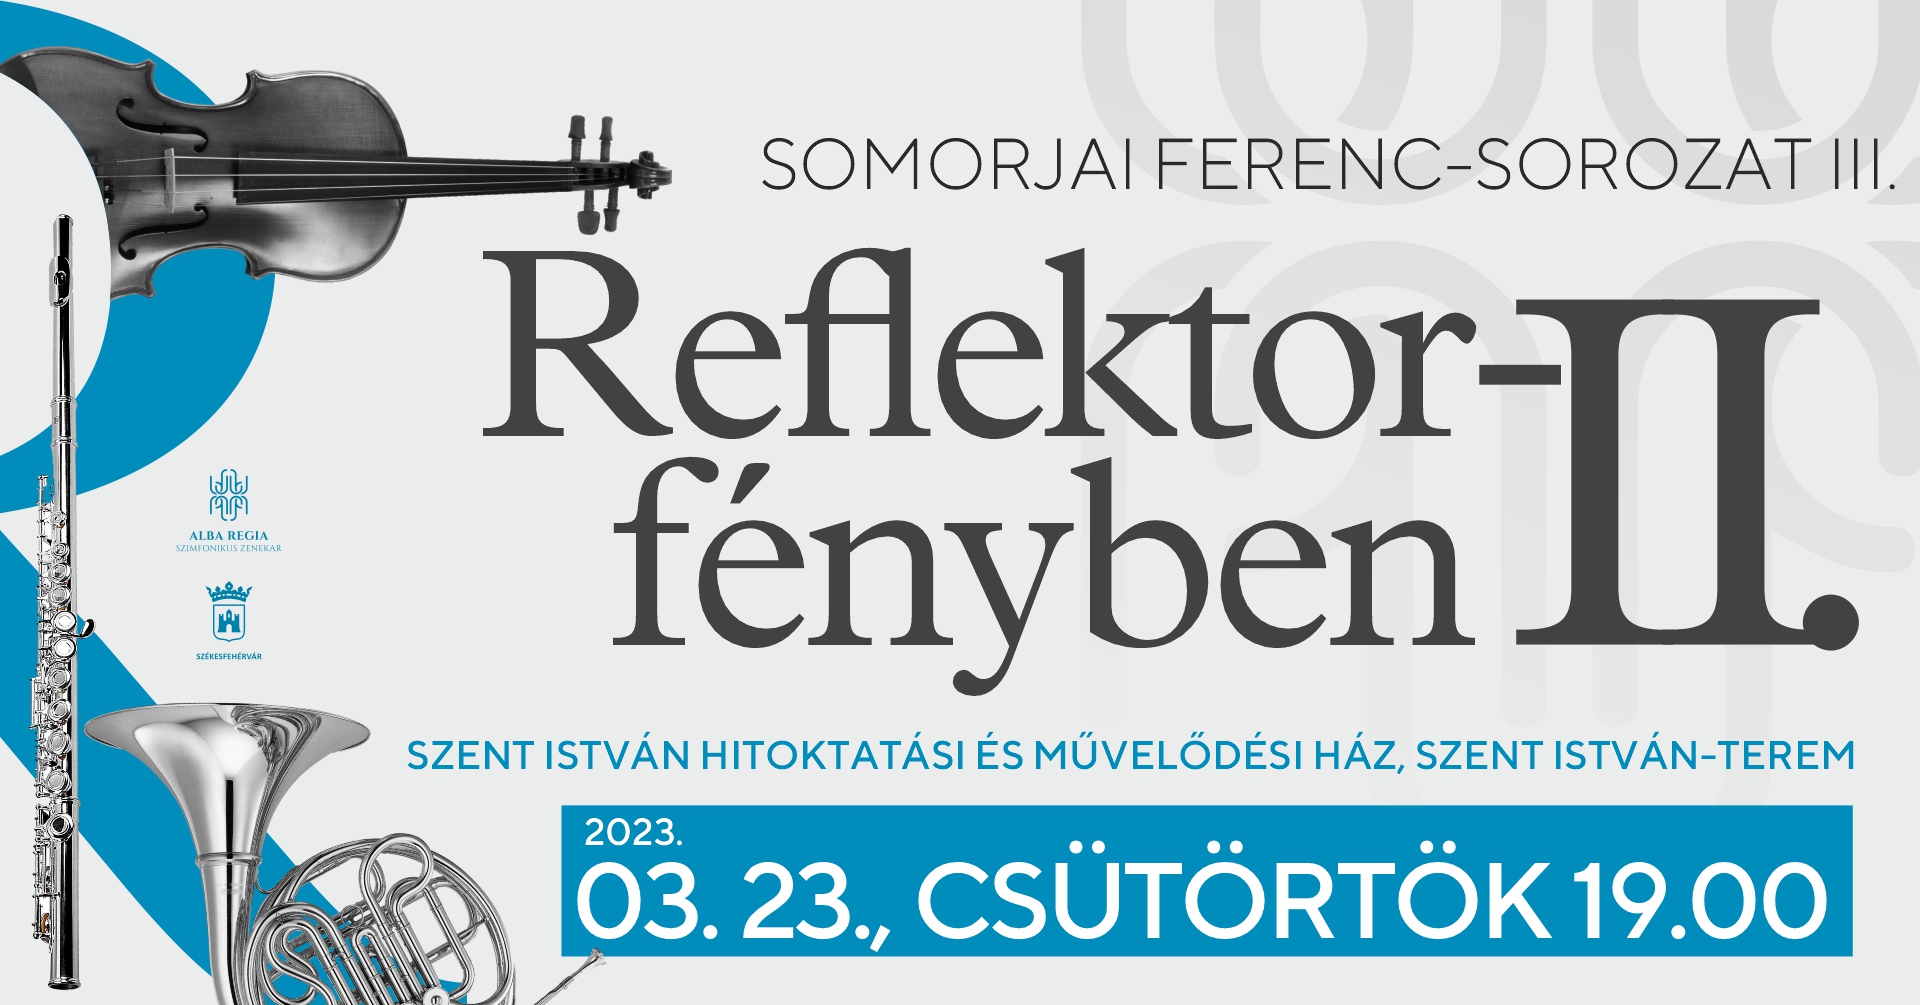 Somorjai Ferenc-sorozat III. - Reflektorfényben II.